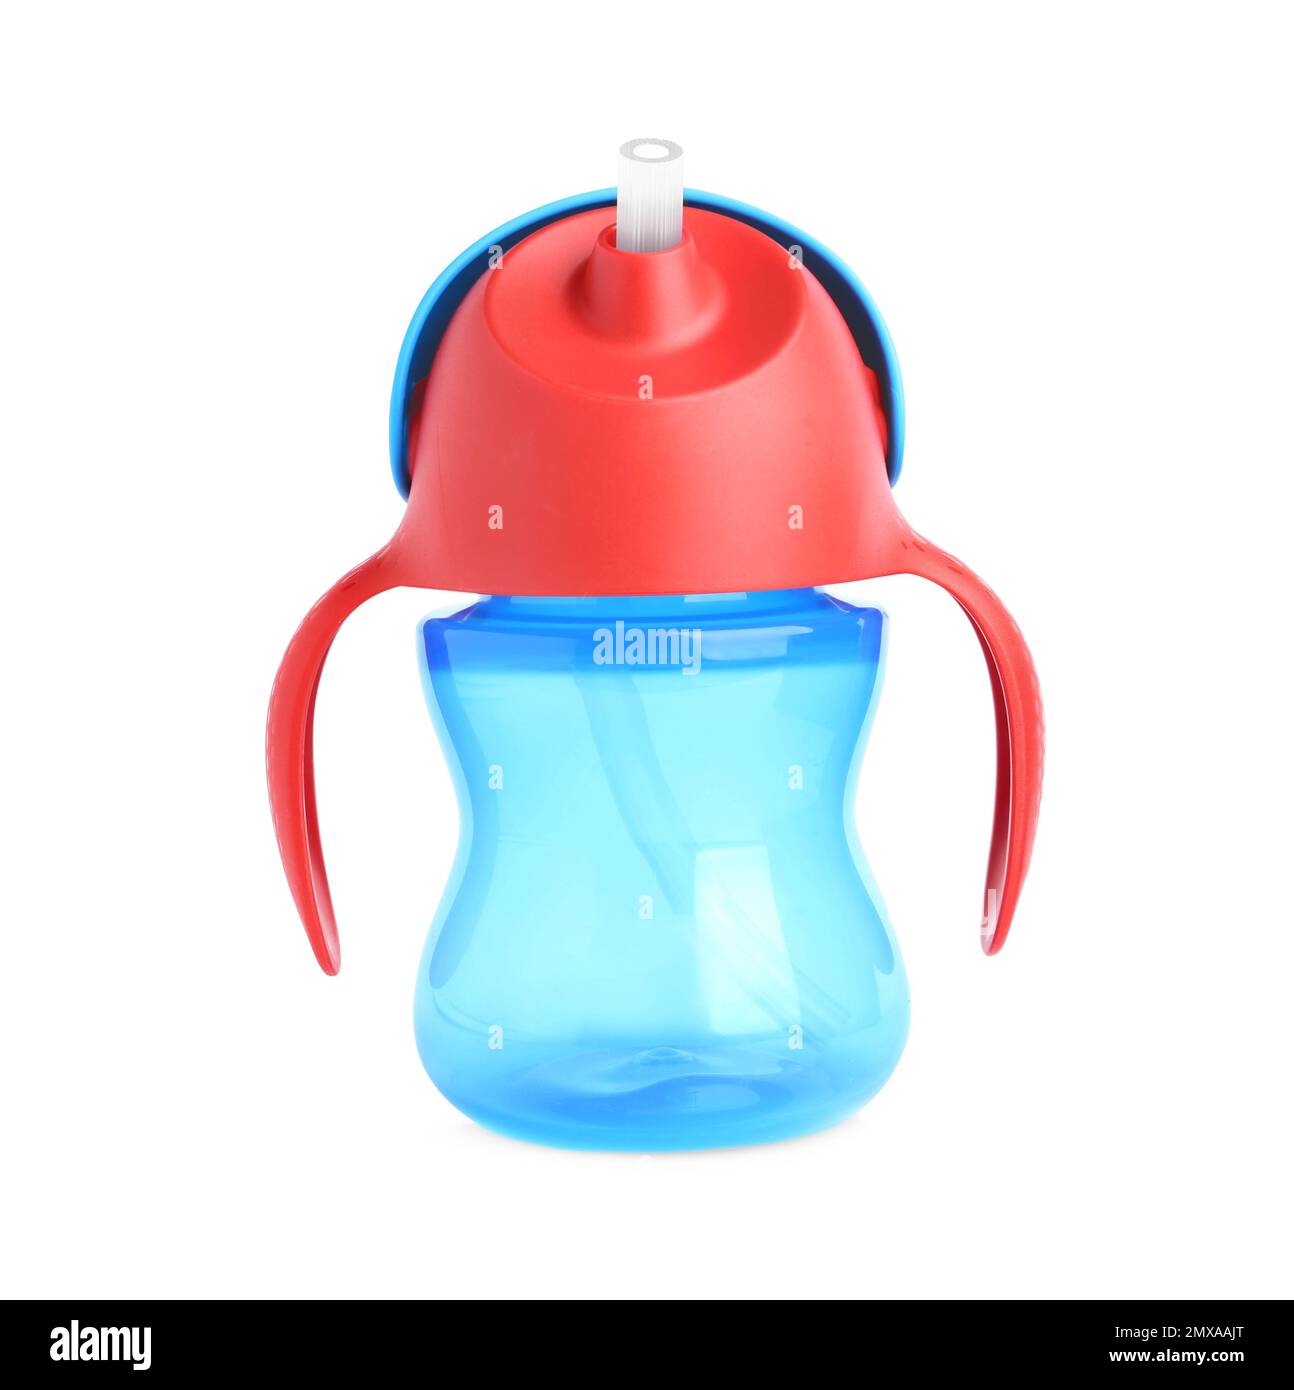 https://c8.alamy.com/comp/2MXAAJT/colorful-plastic-baby-bottle-isolated-on-white-2MXAAJT.jpg